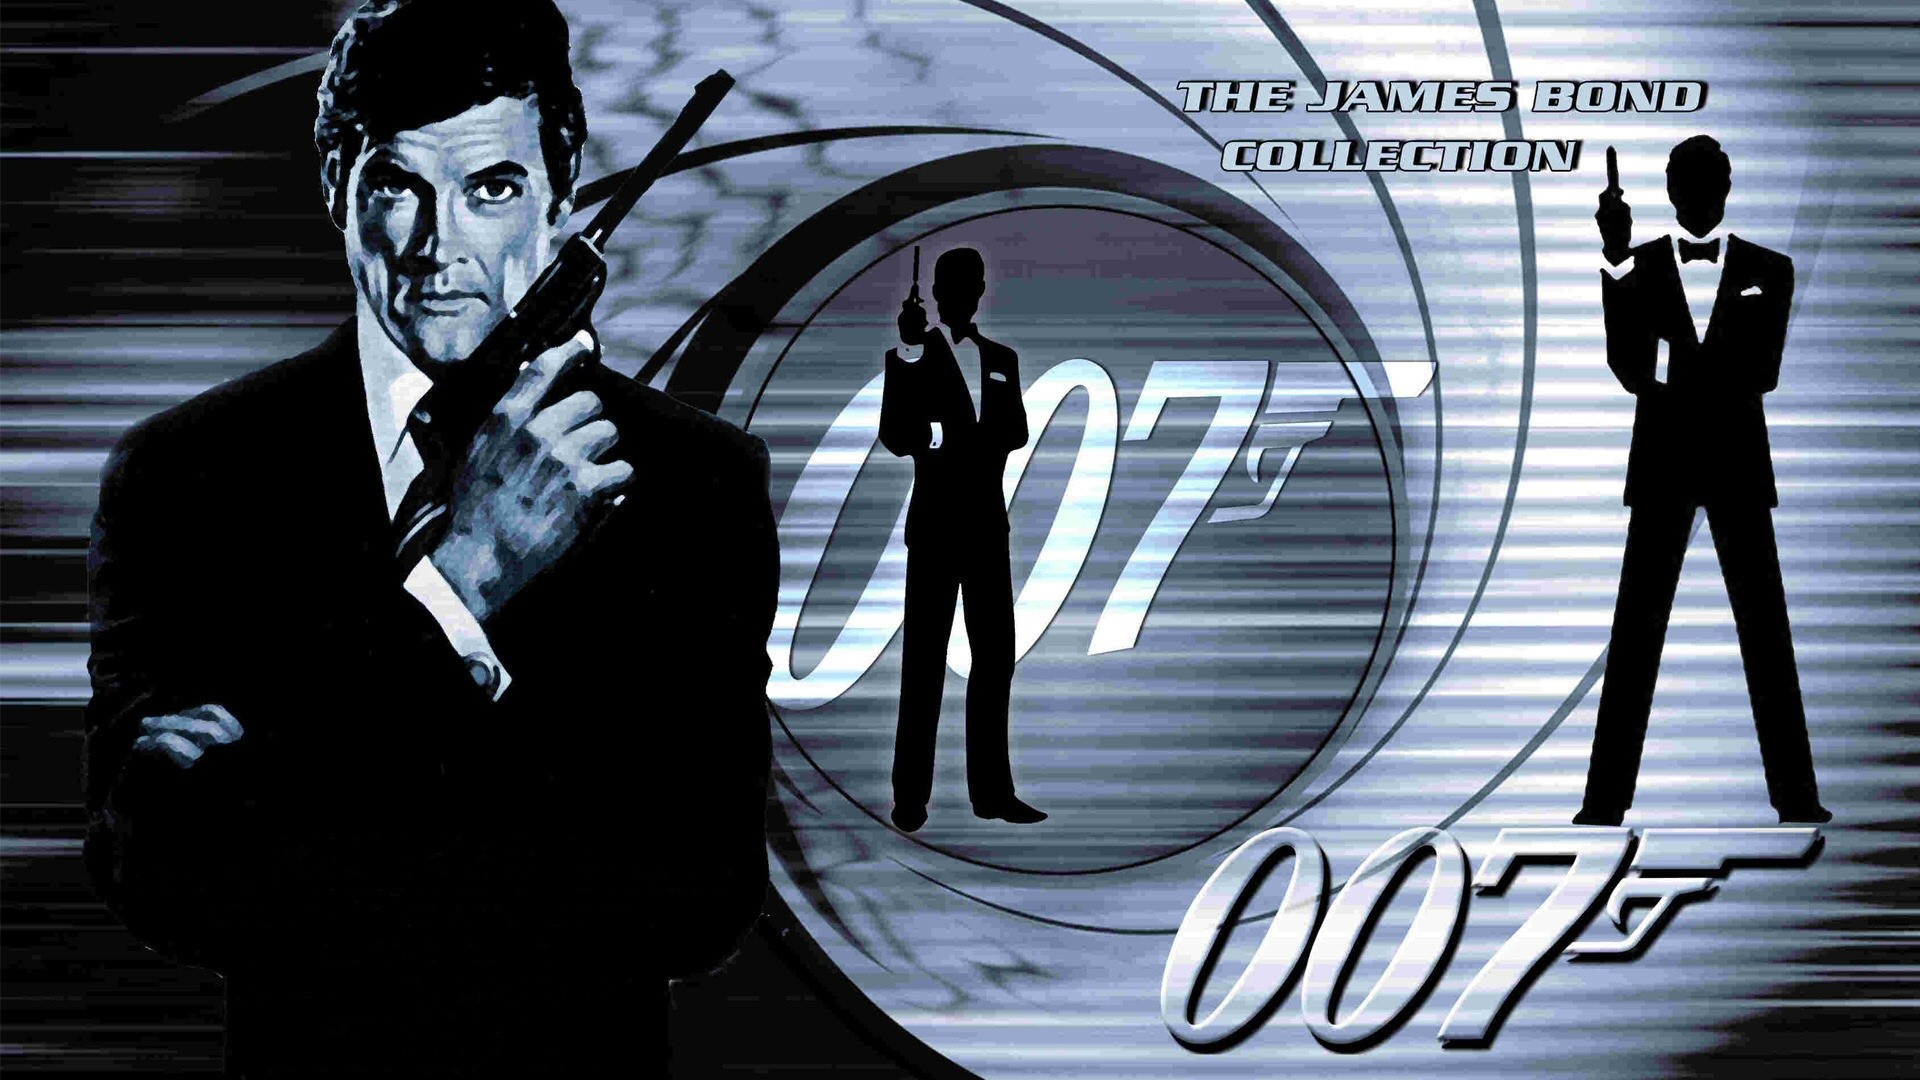 1920x1080 Free James Bond background image | James Bond wallpapers